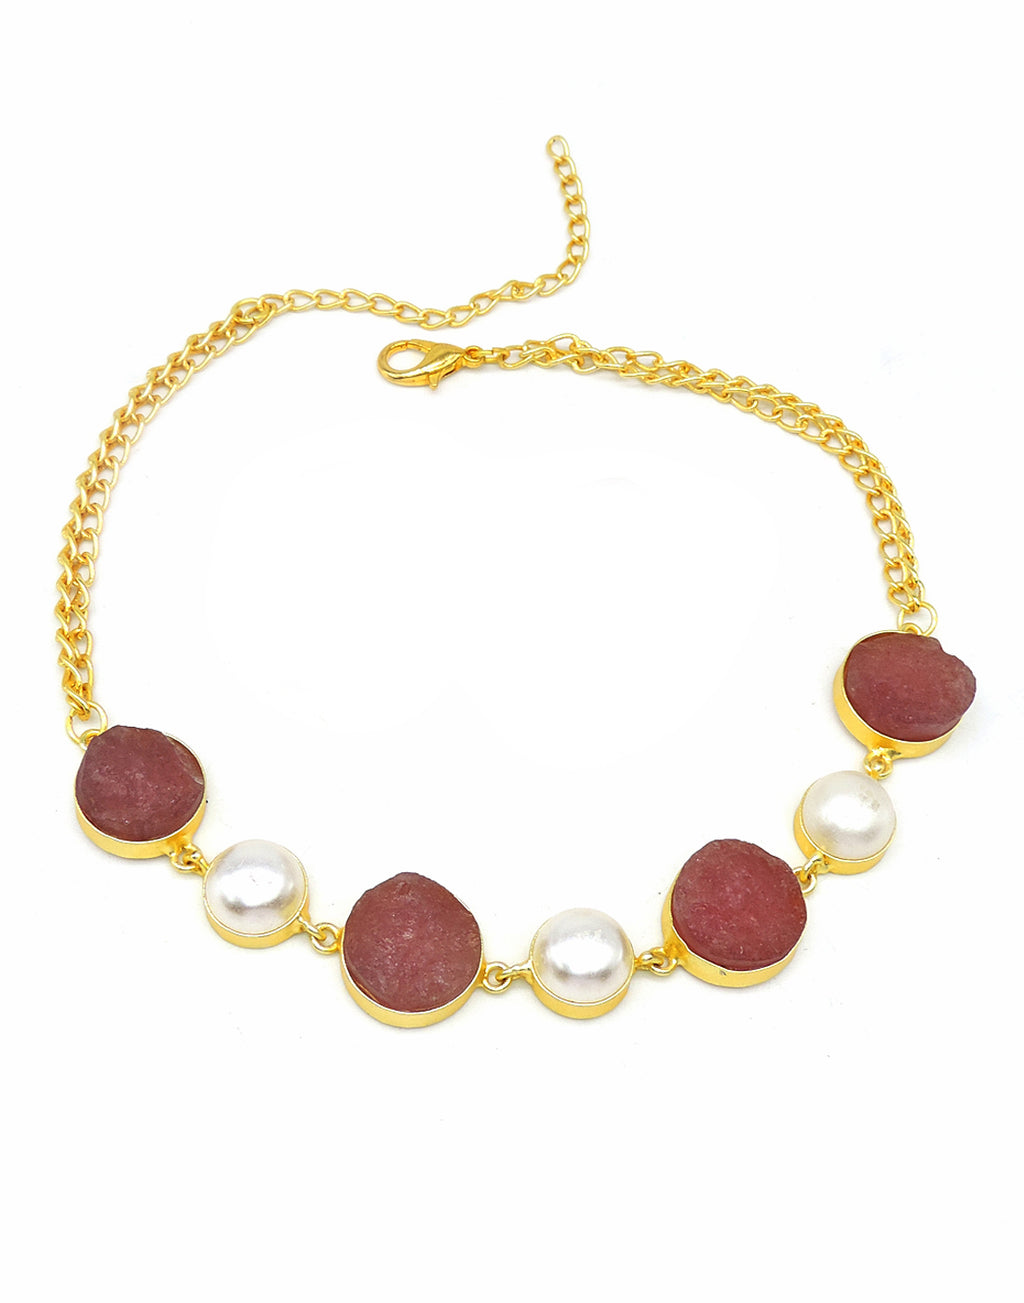 Quartz & Pearl Necklace - Statement Necklaces - Gold-Plated & Hypoallergenic Jewellery - Made in India - Dubai Jewellery - Dori